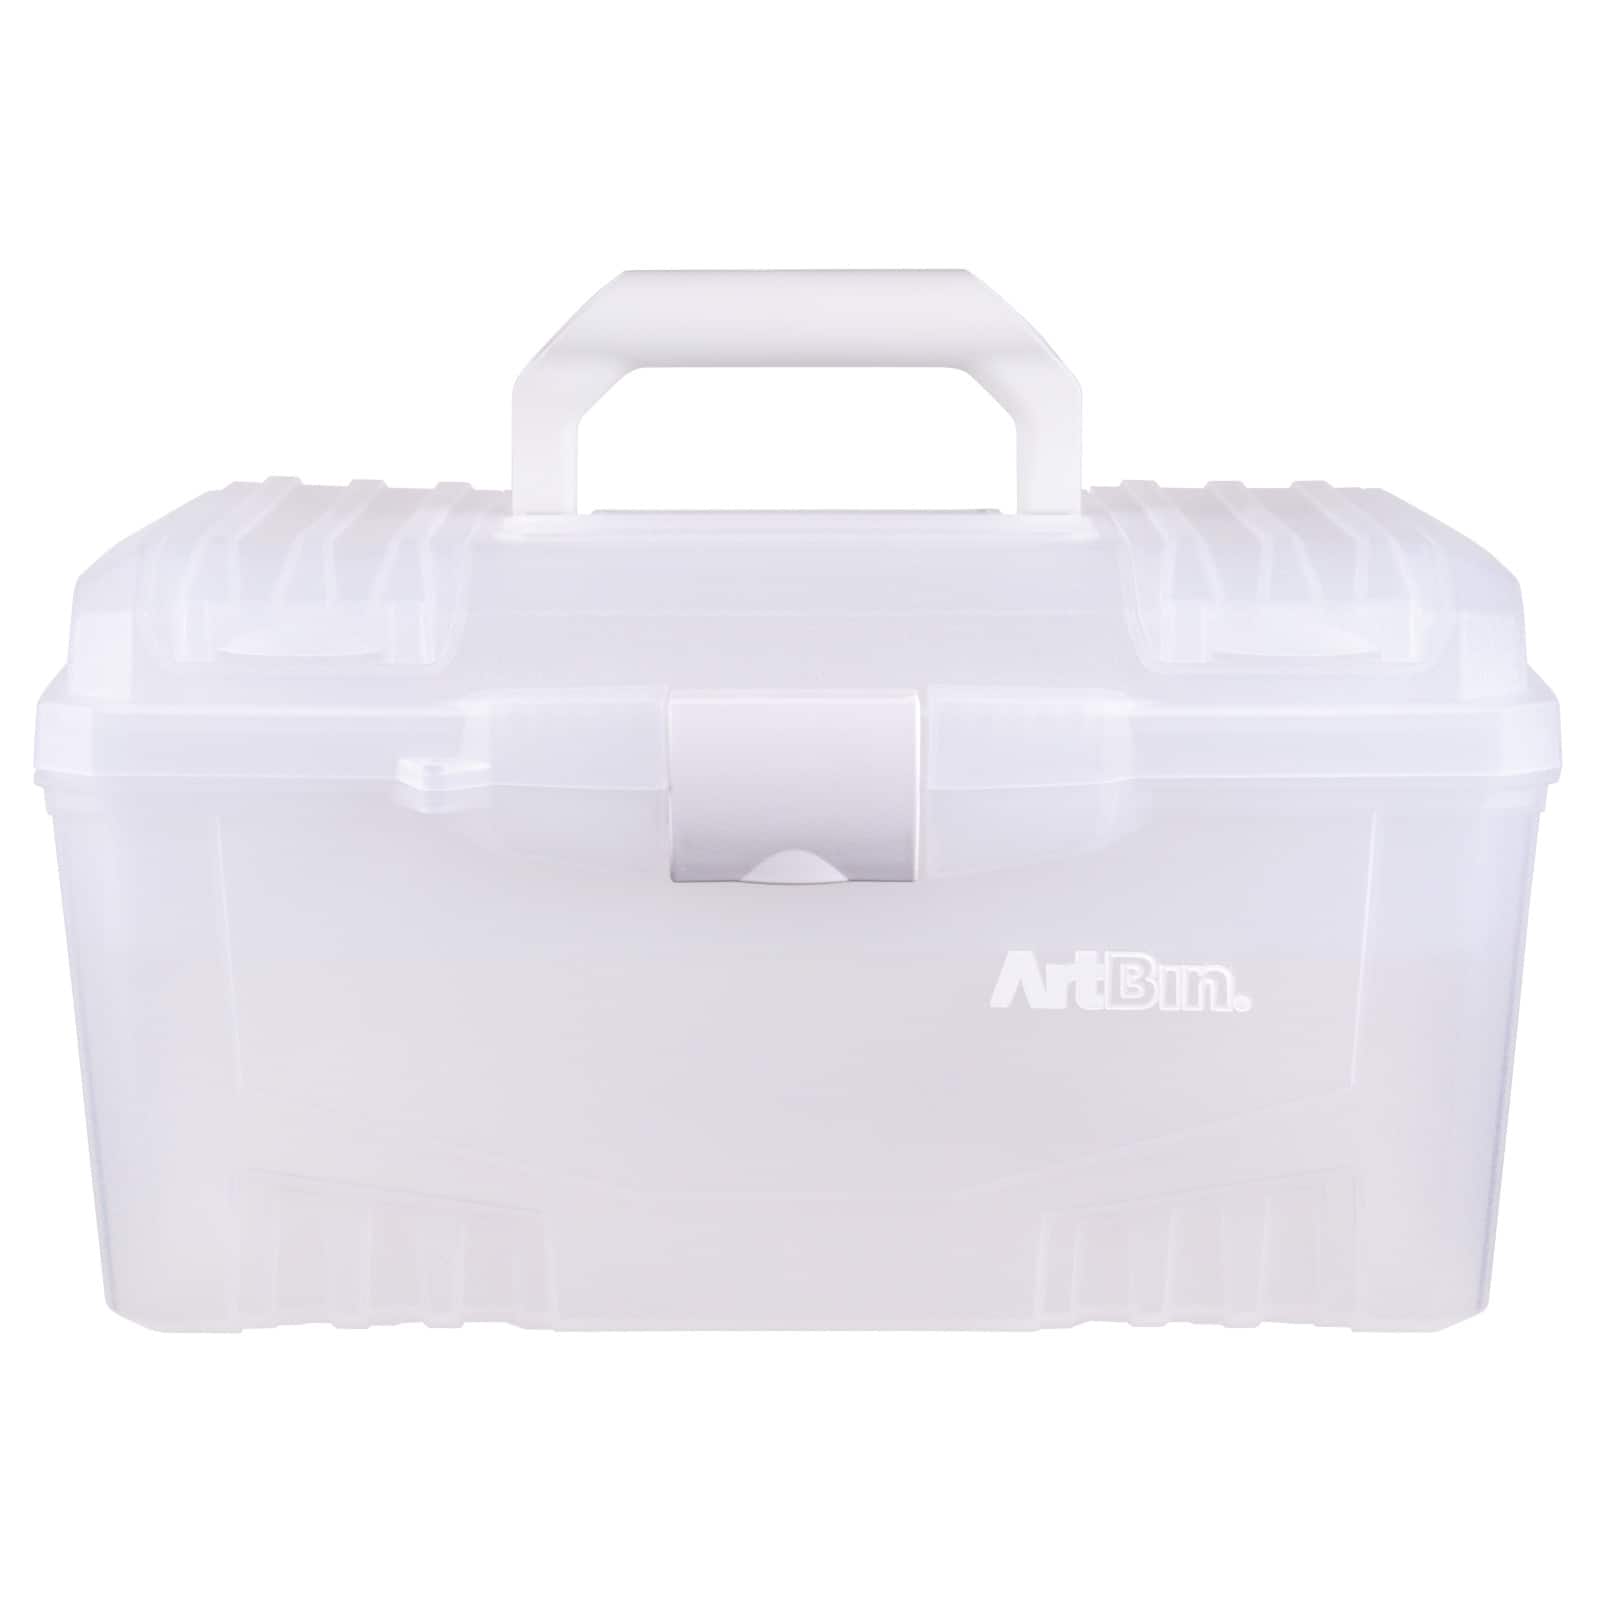 ArtBin 2-Tray Sketch Box (6892AG)